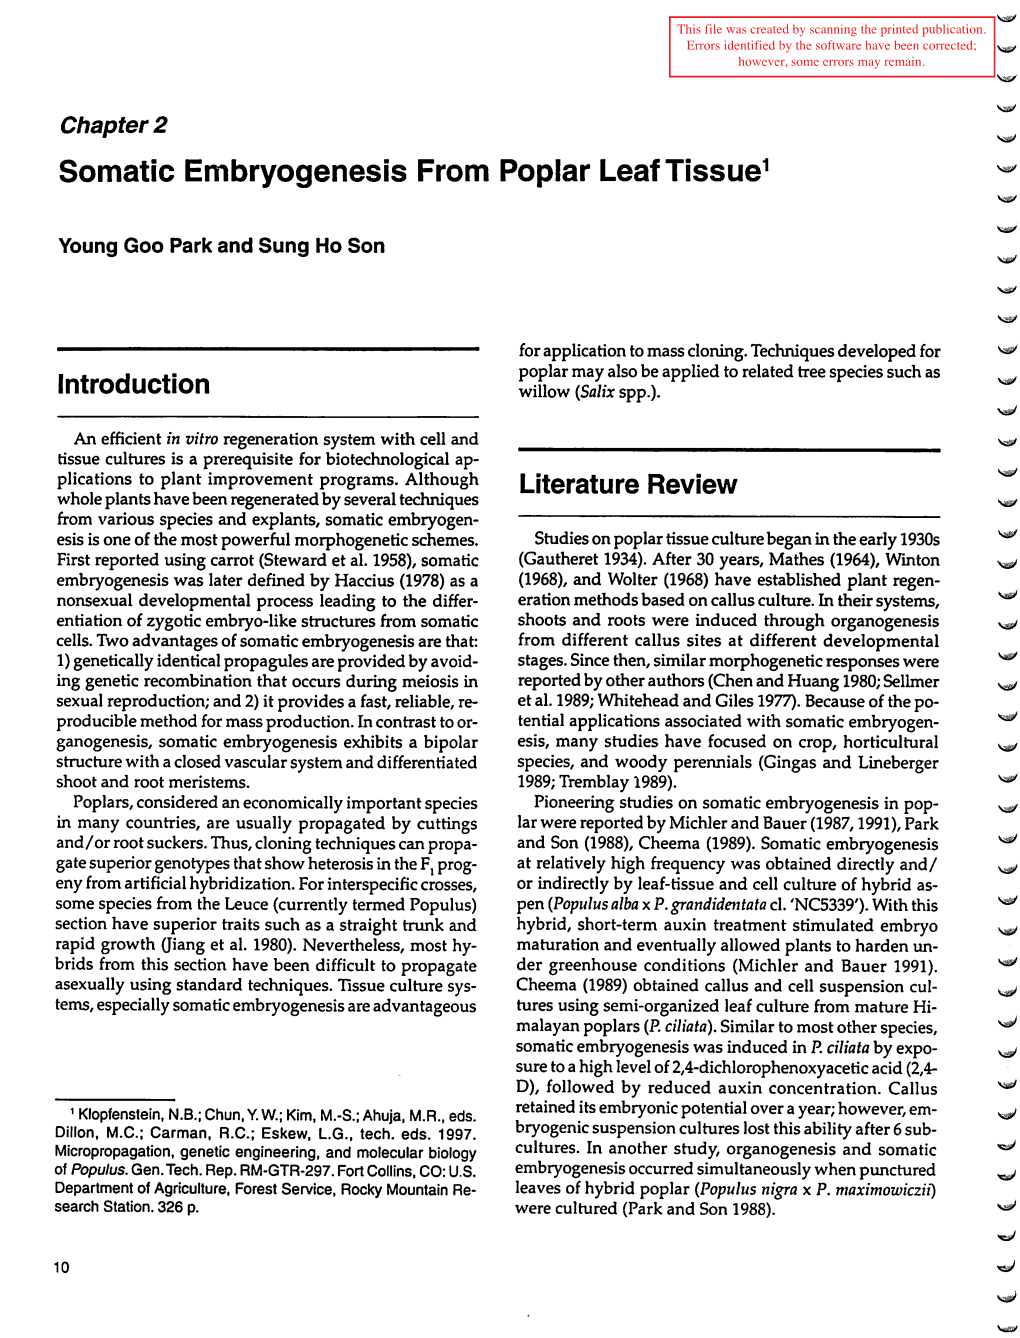 Somatic En1bryogenesis from Poplar Leaf Tissue1